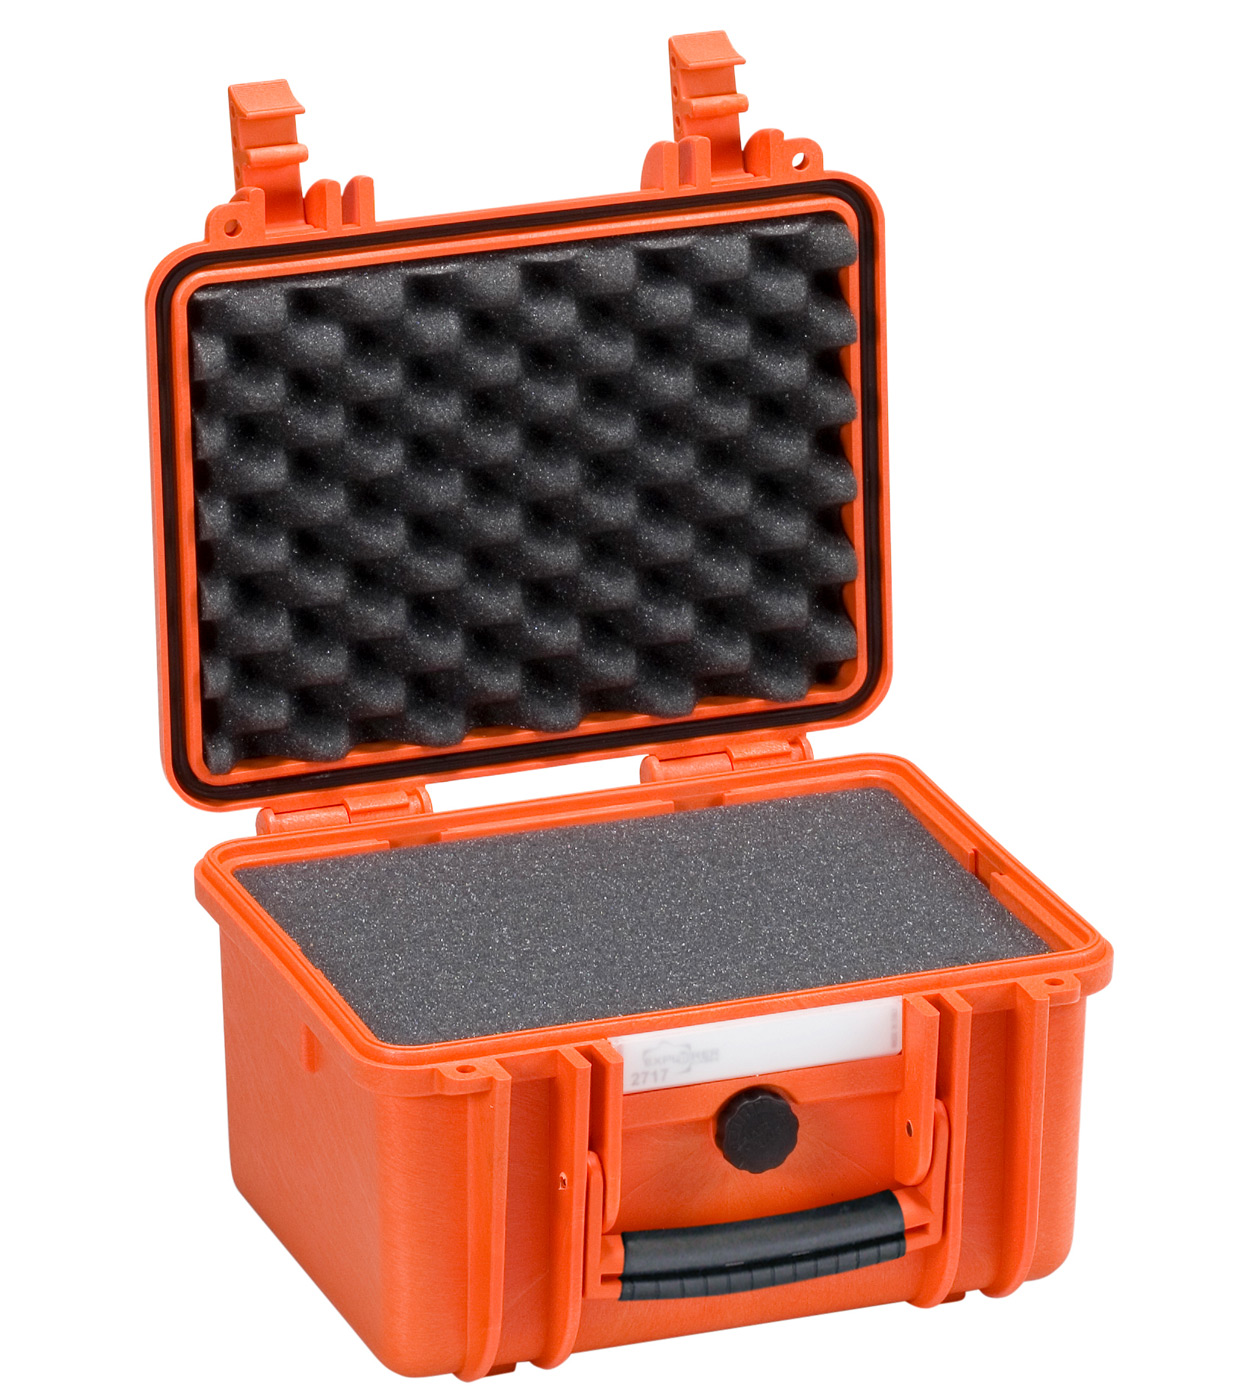 Maleta Explorer Cases 2717 color naranja | Maletas Estancas